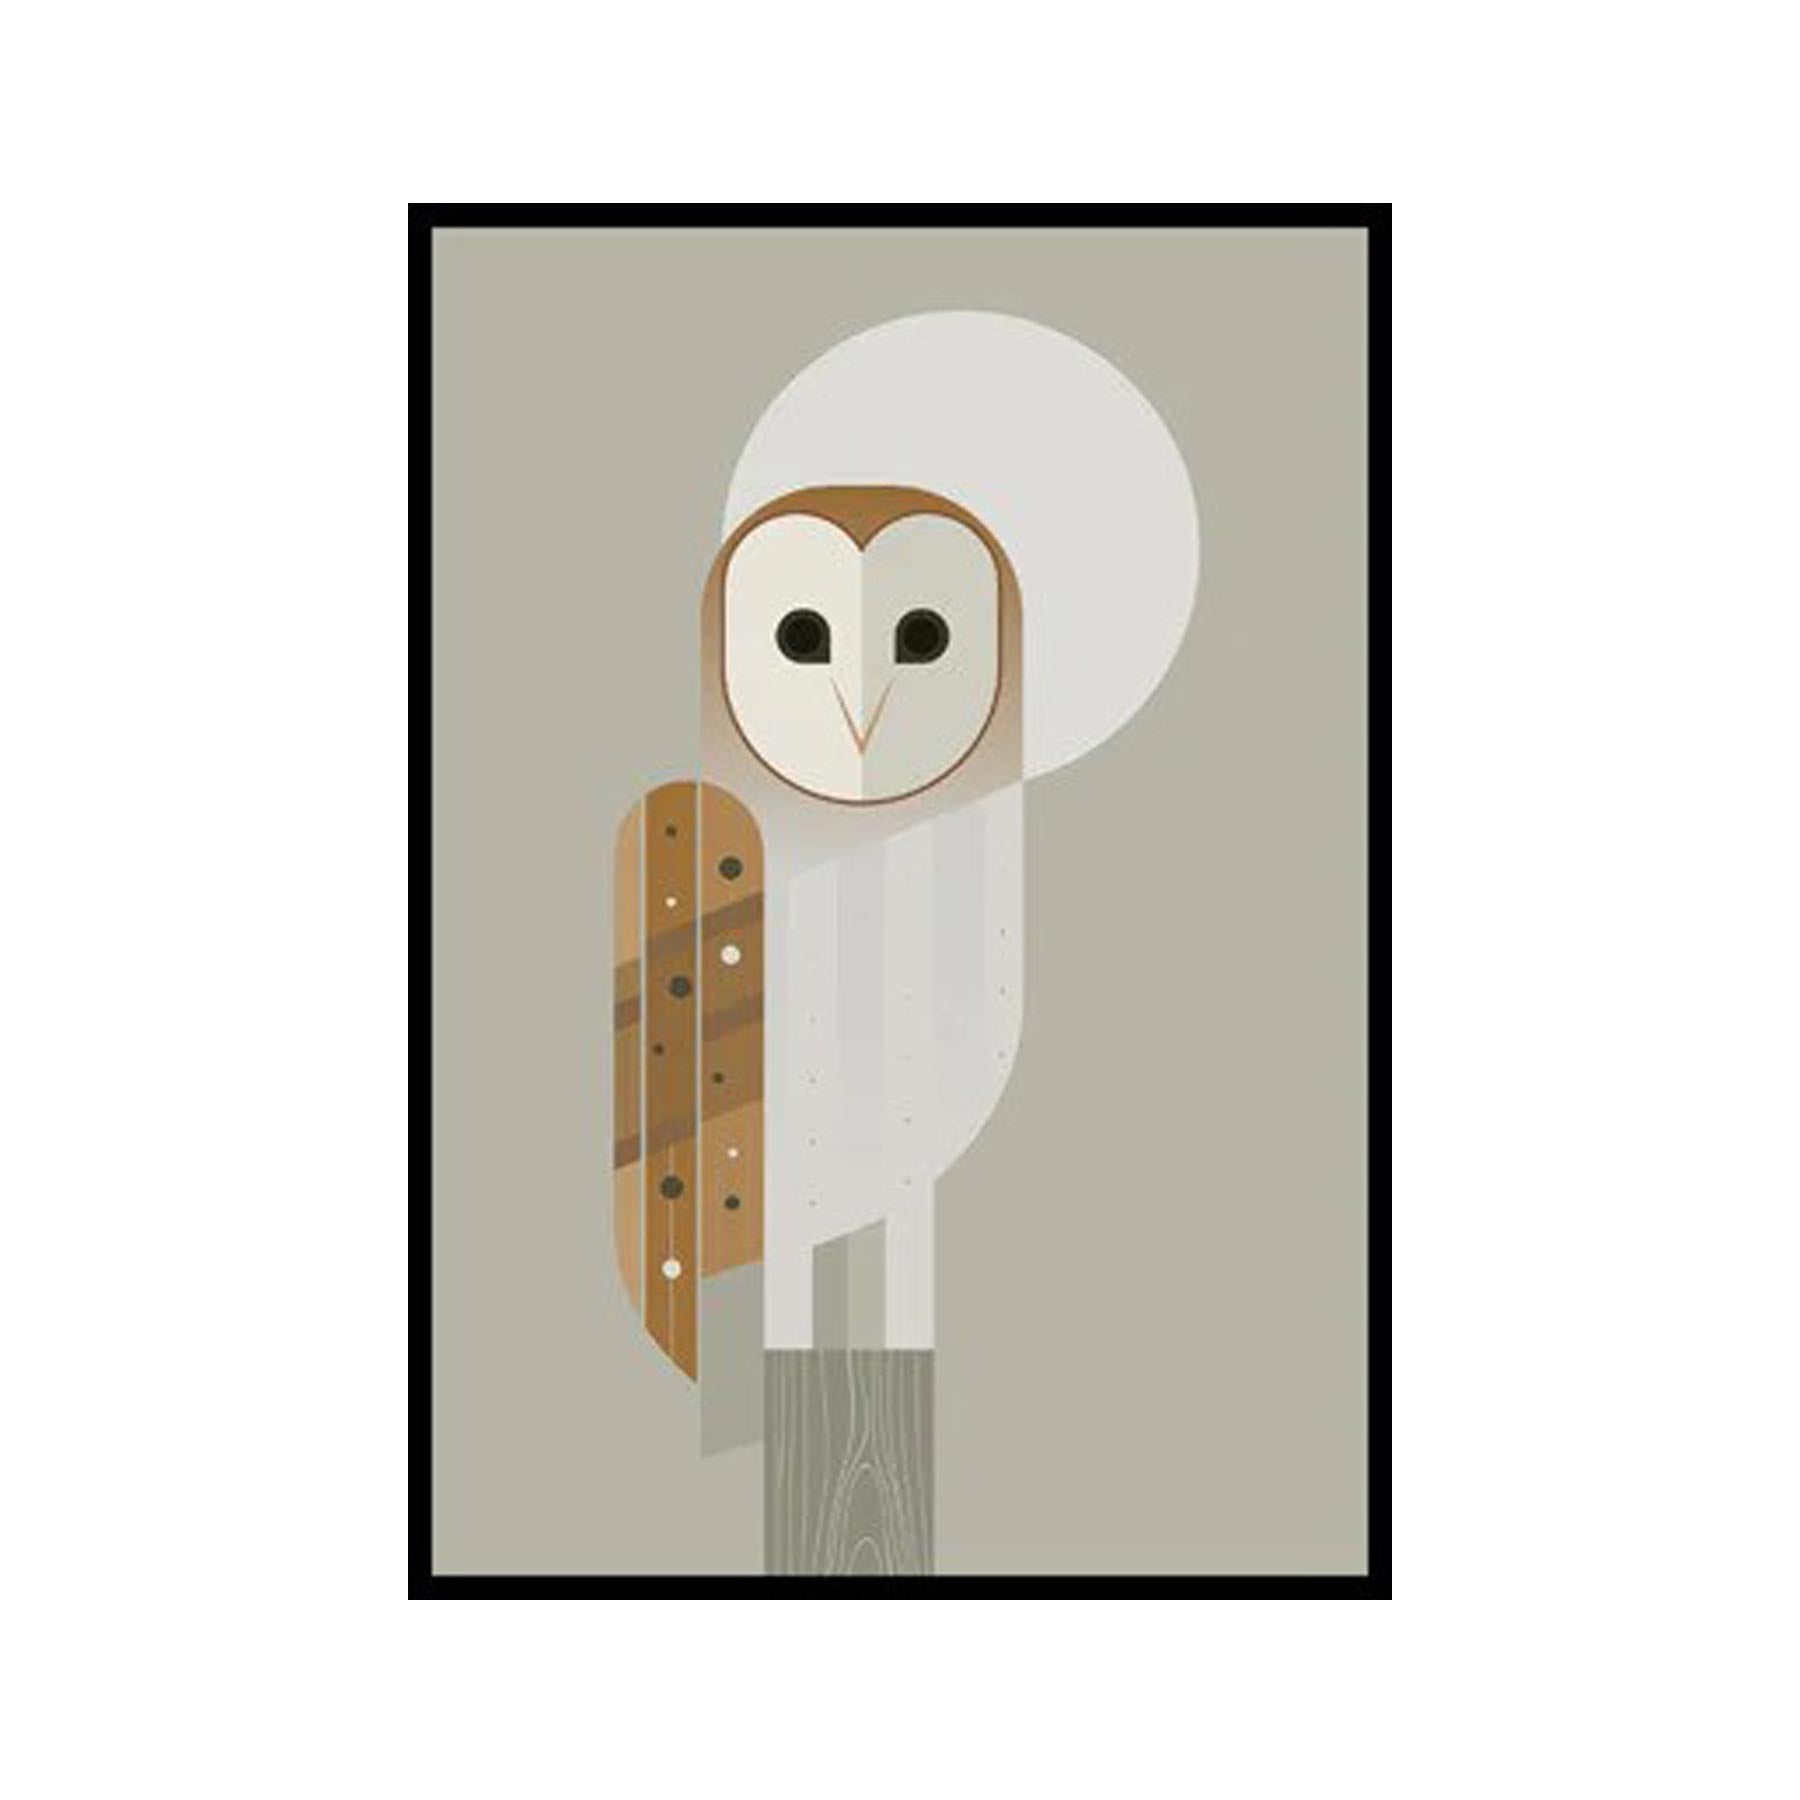 Barn owl greetings card